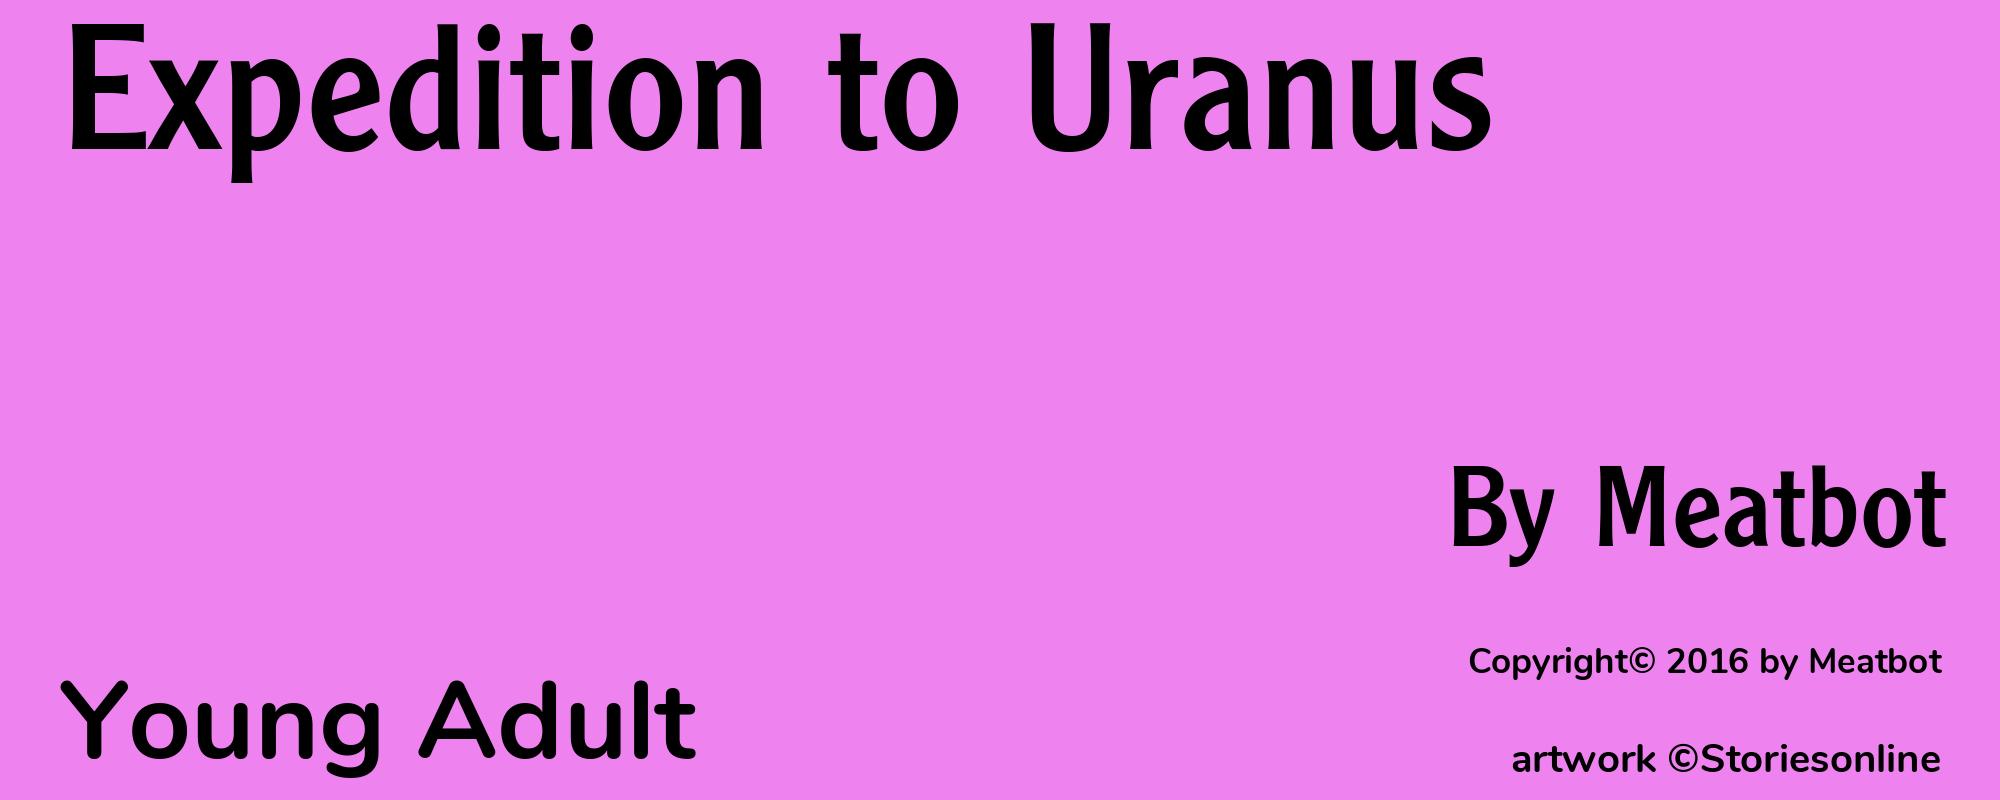 Expedition to Uranus - Cover